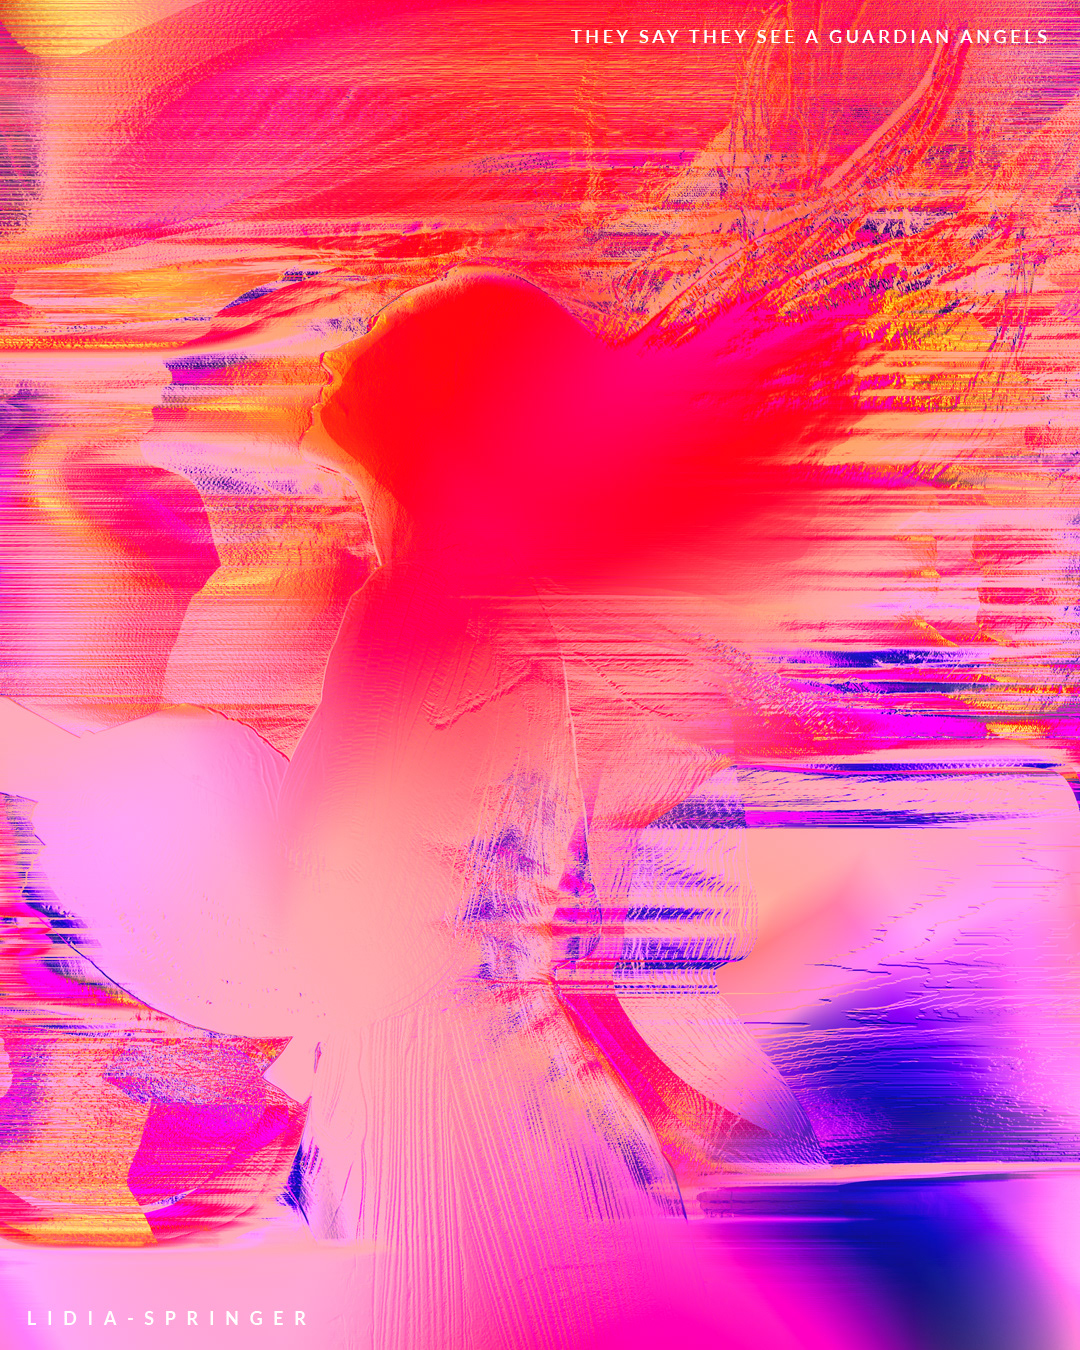 chrome lidia springer spiritual angel Aura guardianangel visual identity digital ILLUSTRATION  арт